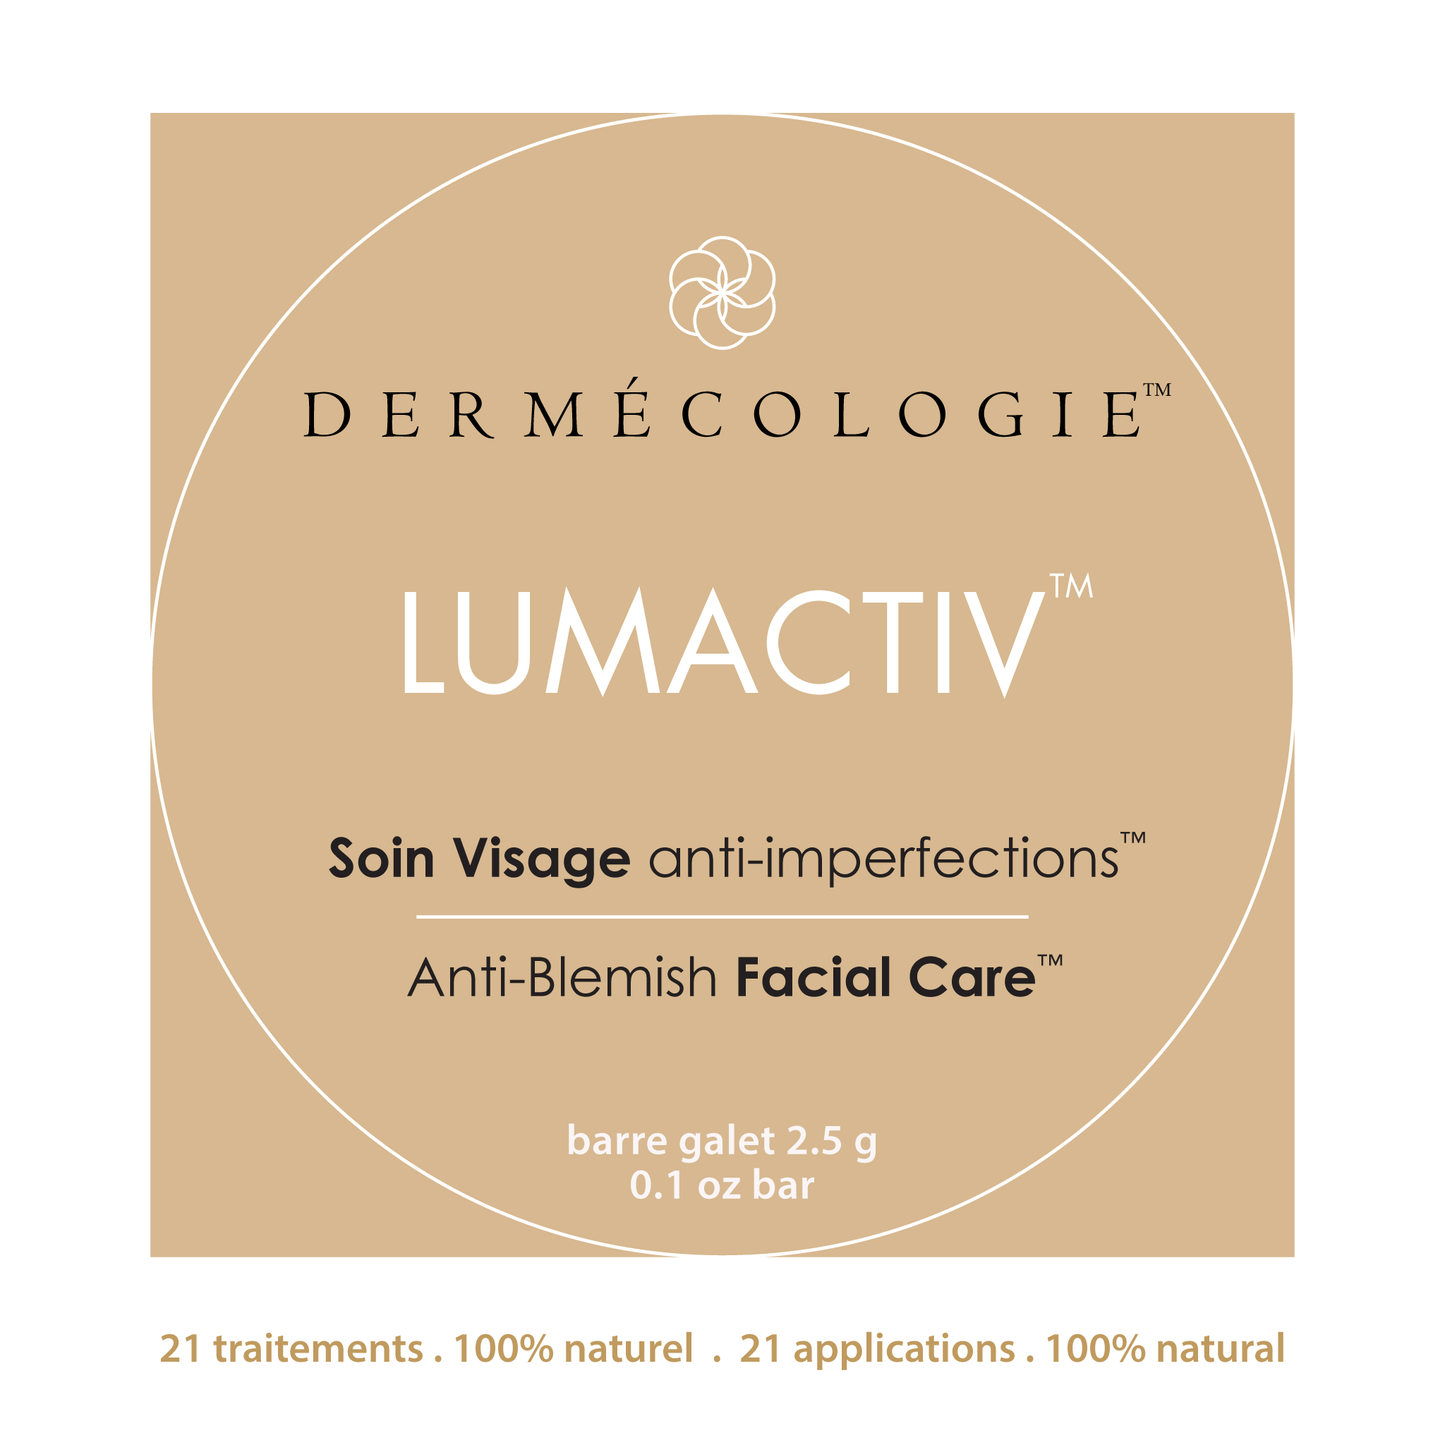 LUMACTIV™ Blemish-Free 
Complete Facial Care
Travel Size - 2.5g 0.08oz bar
21 day Rejuvenating Treatment